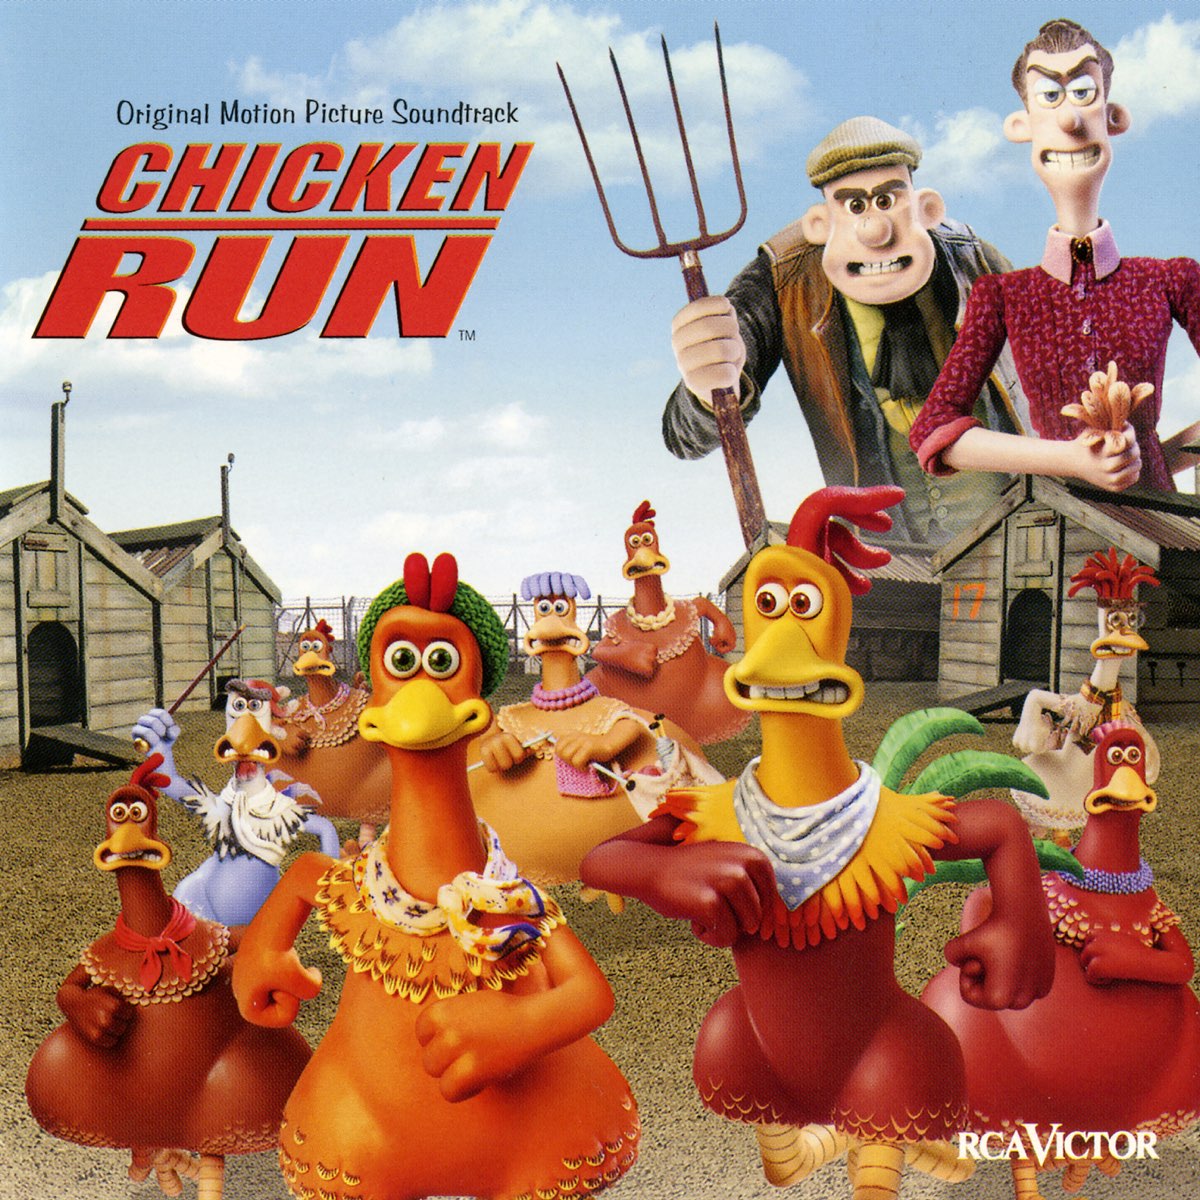 Chicken Run (Original Score) by John Powell & Harry Gregson-Williams.